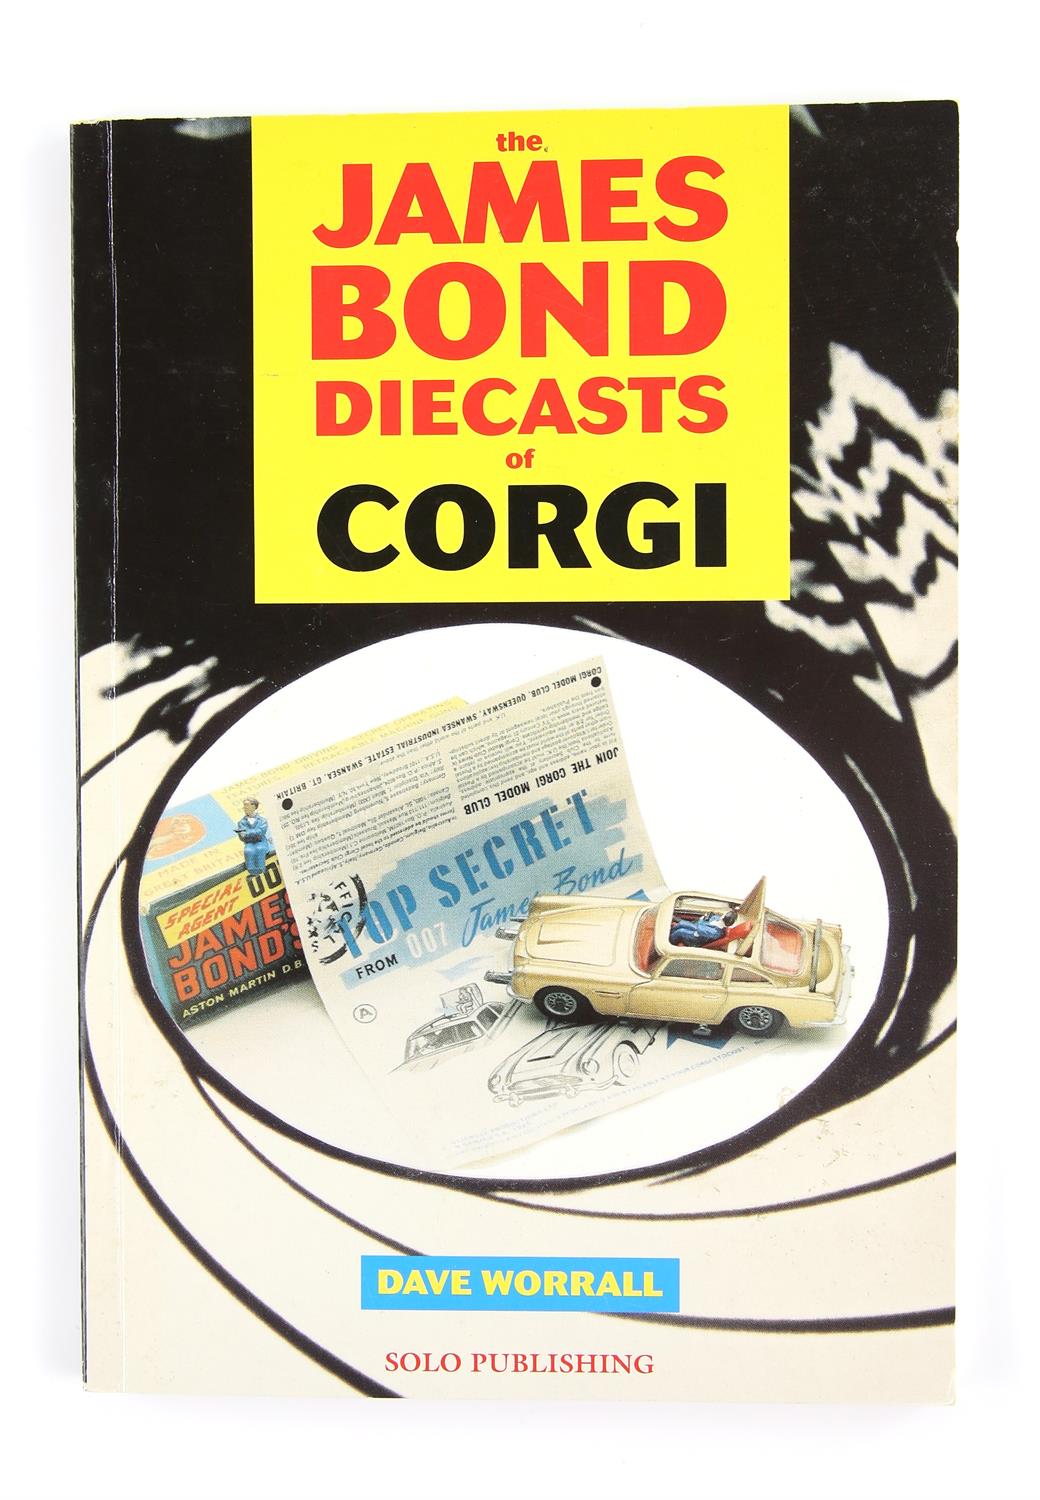 James Bond Corgi - Four boxed models including Drax Jet Ranger 930, Space Shuttle 649, - Image 4 of 4